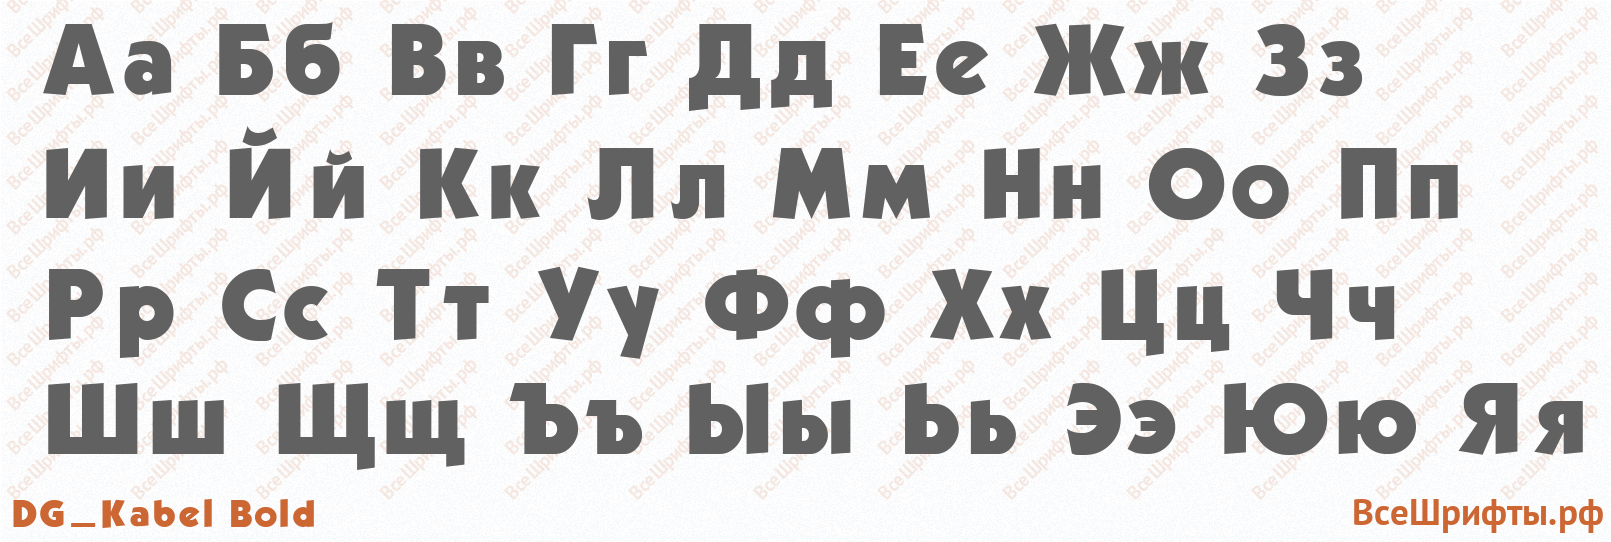 Шрифт DG_Kabel Bold с русскими буквами